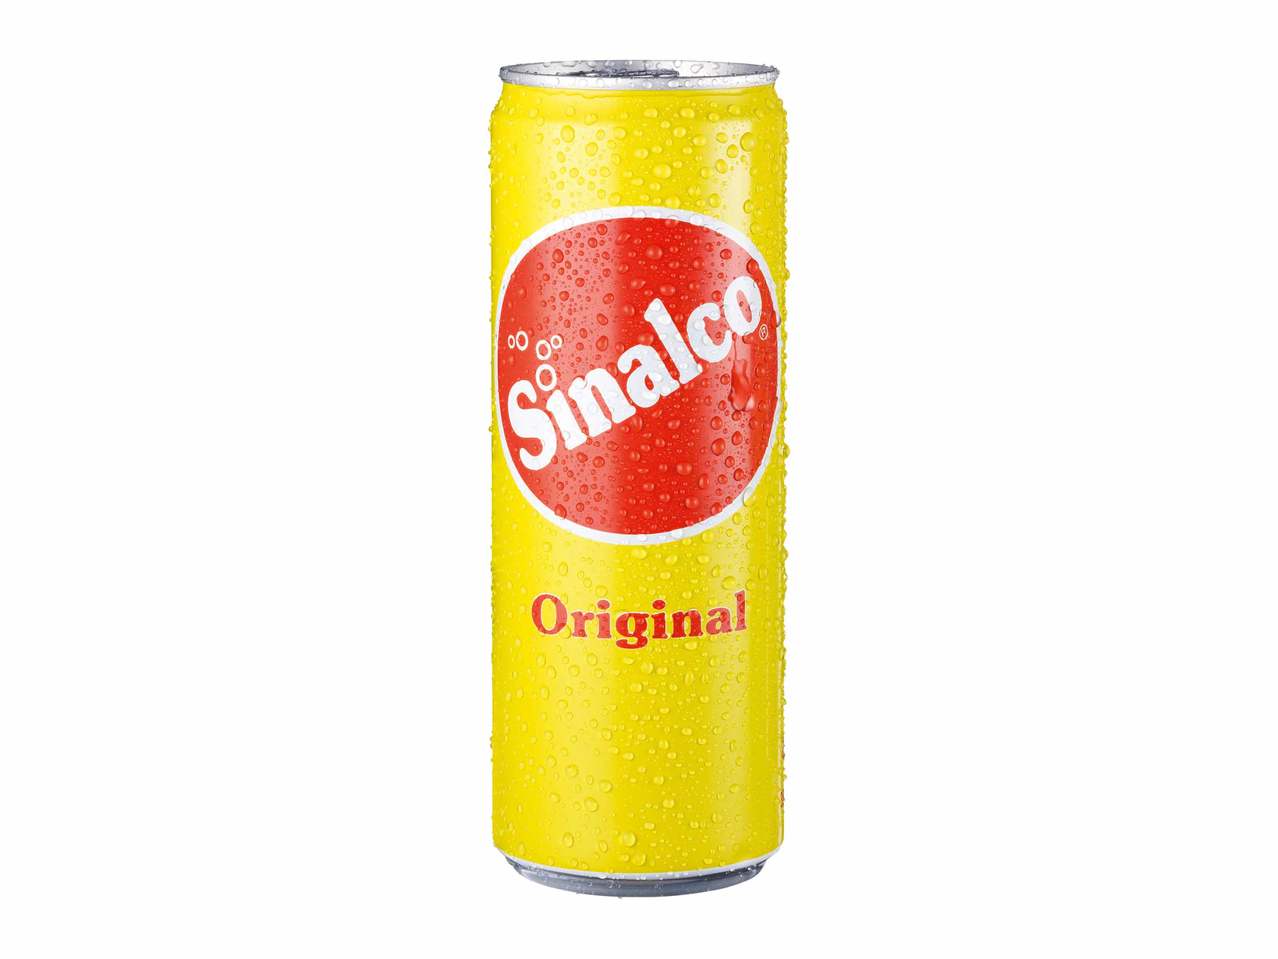 Sinalco Original​